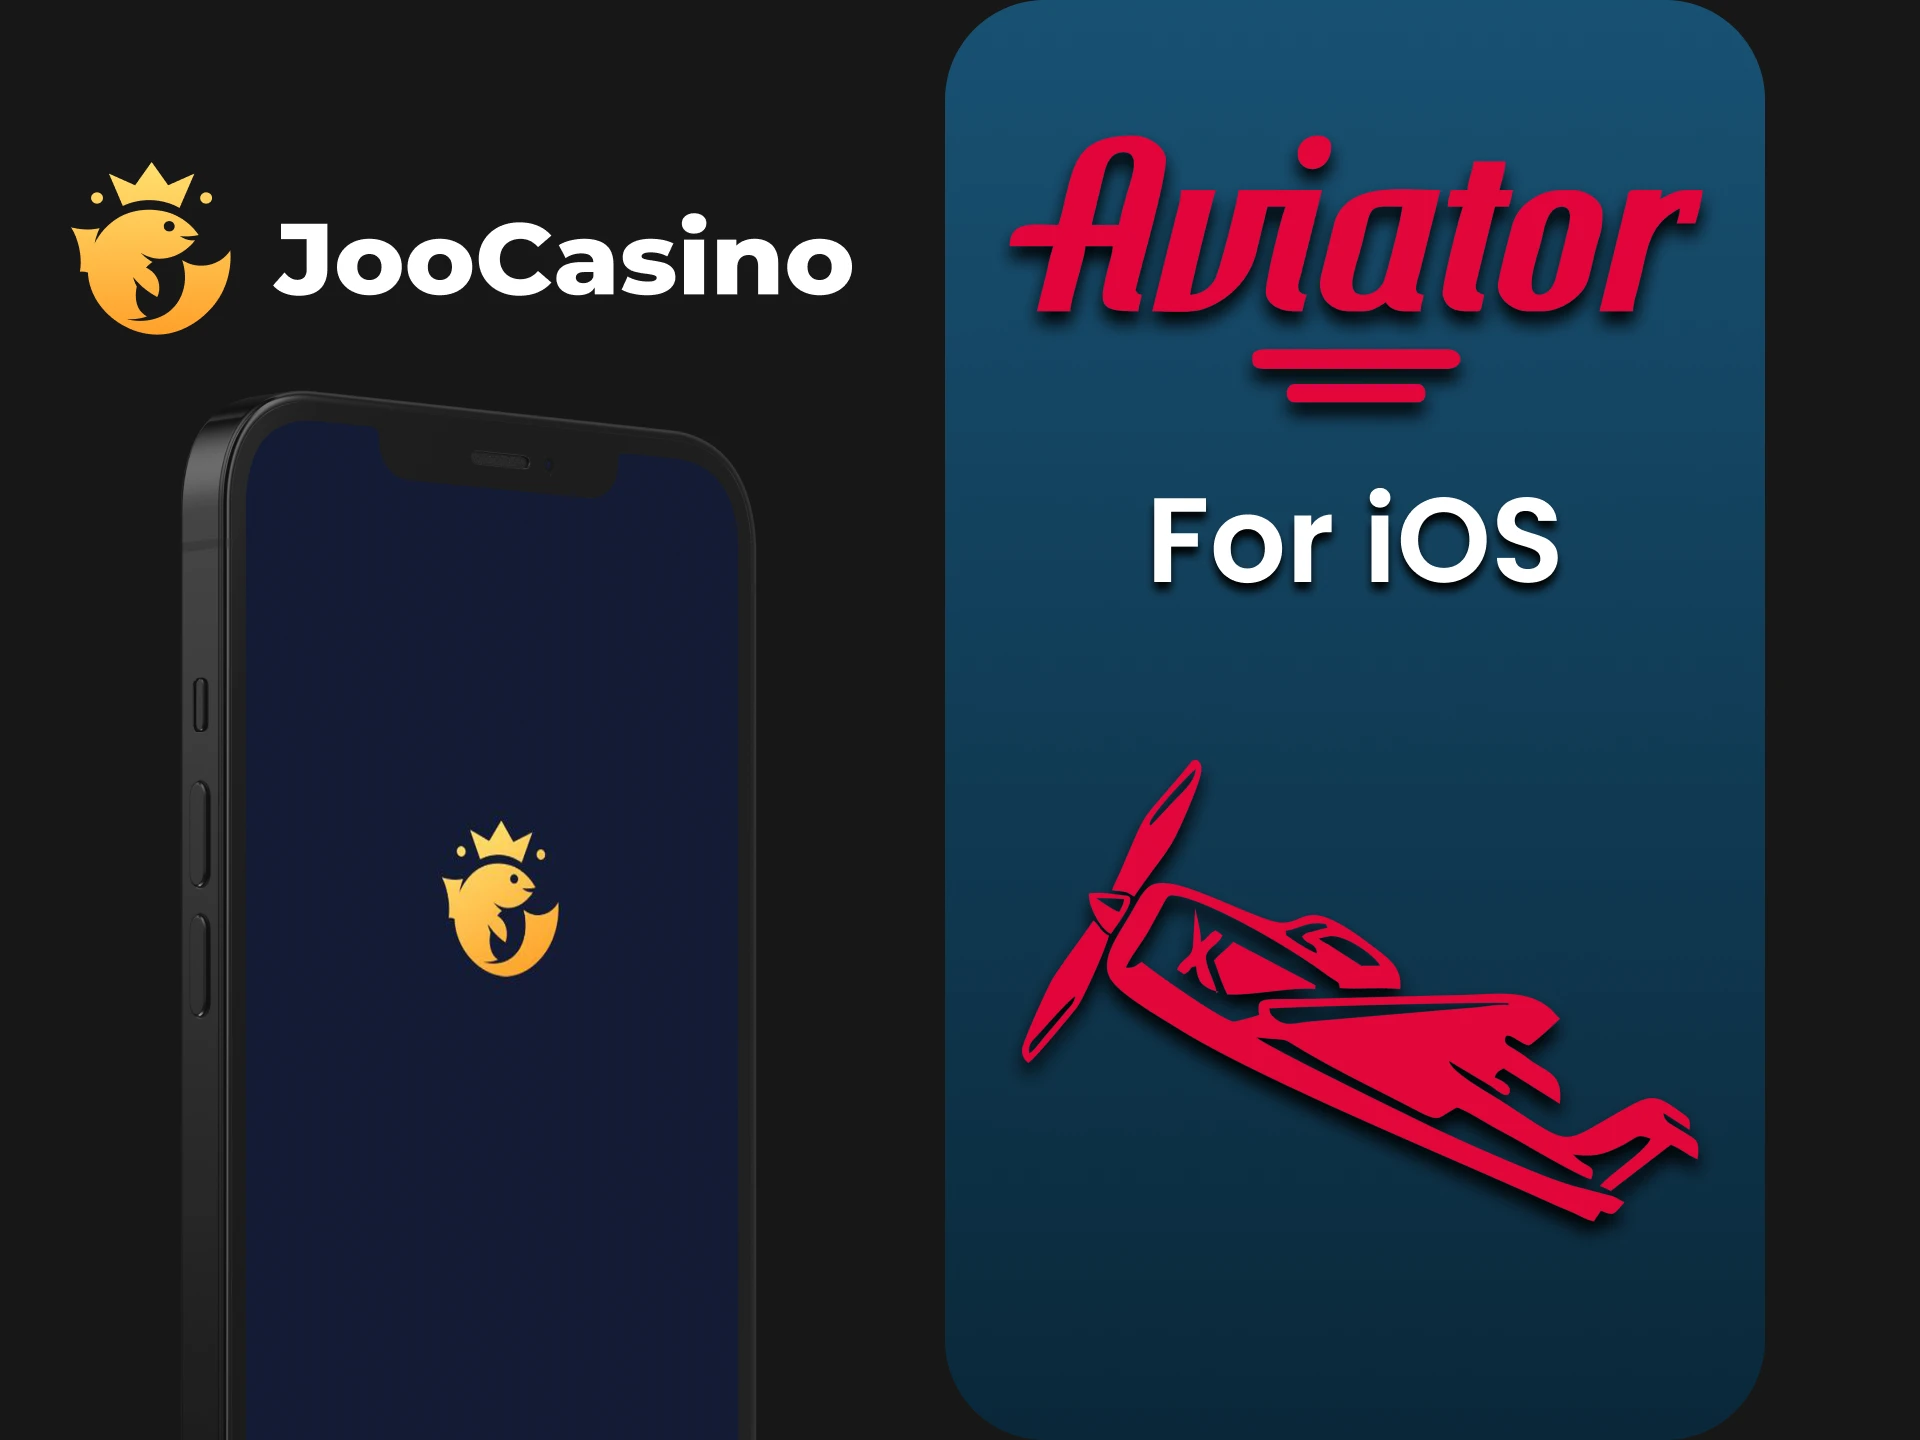 Play Aviator in the Joo Casino app on iOS devices.